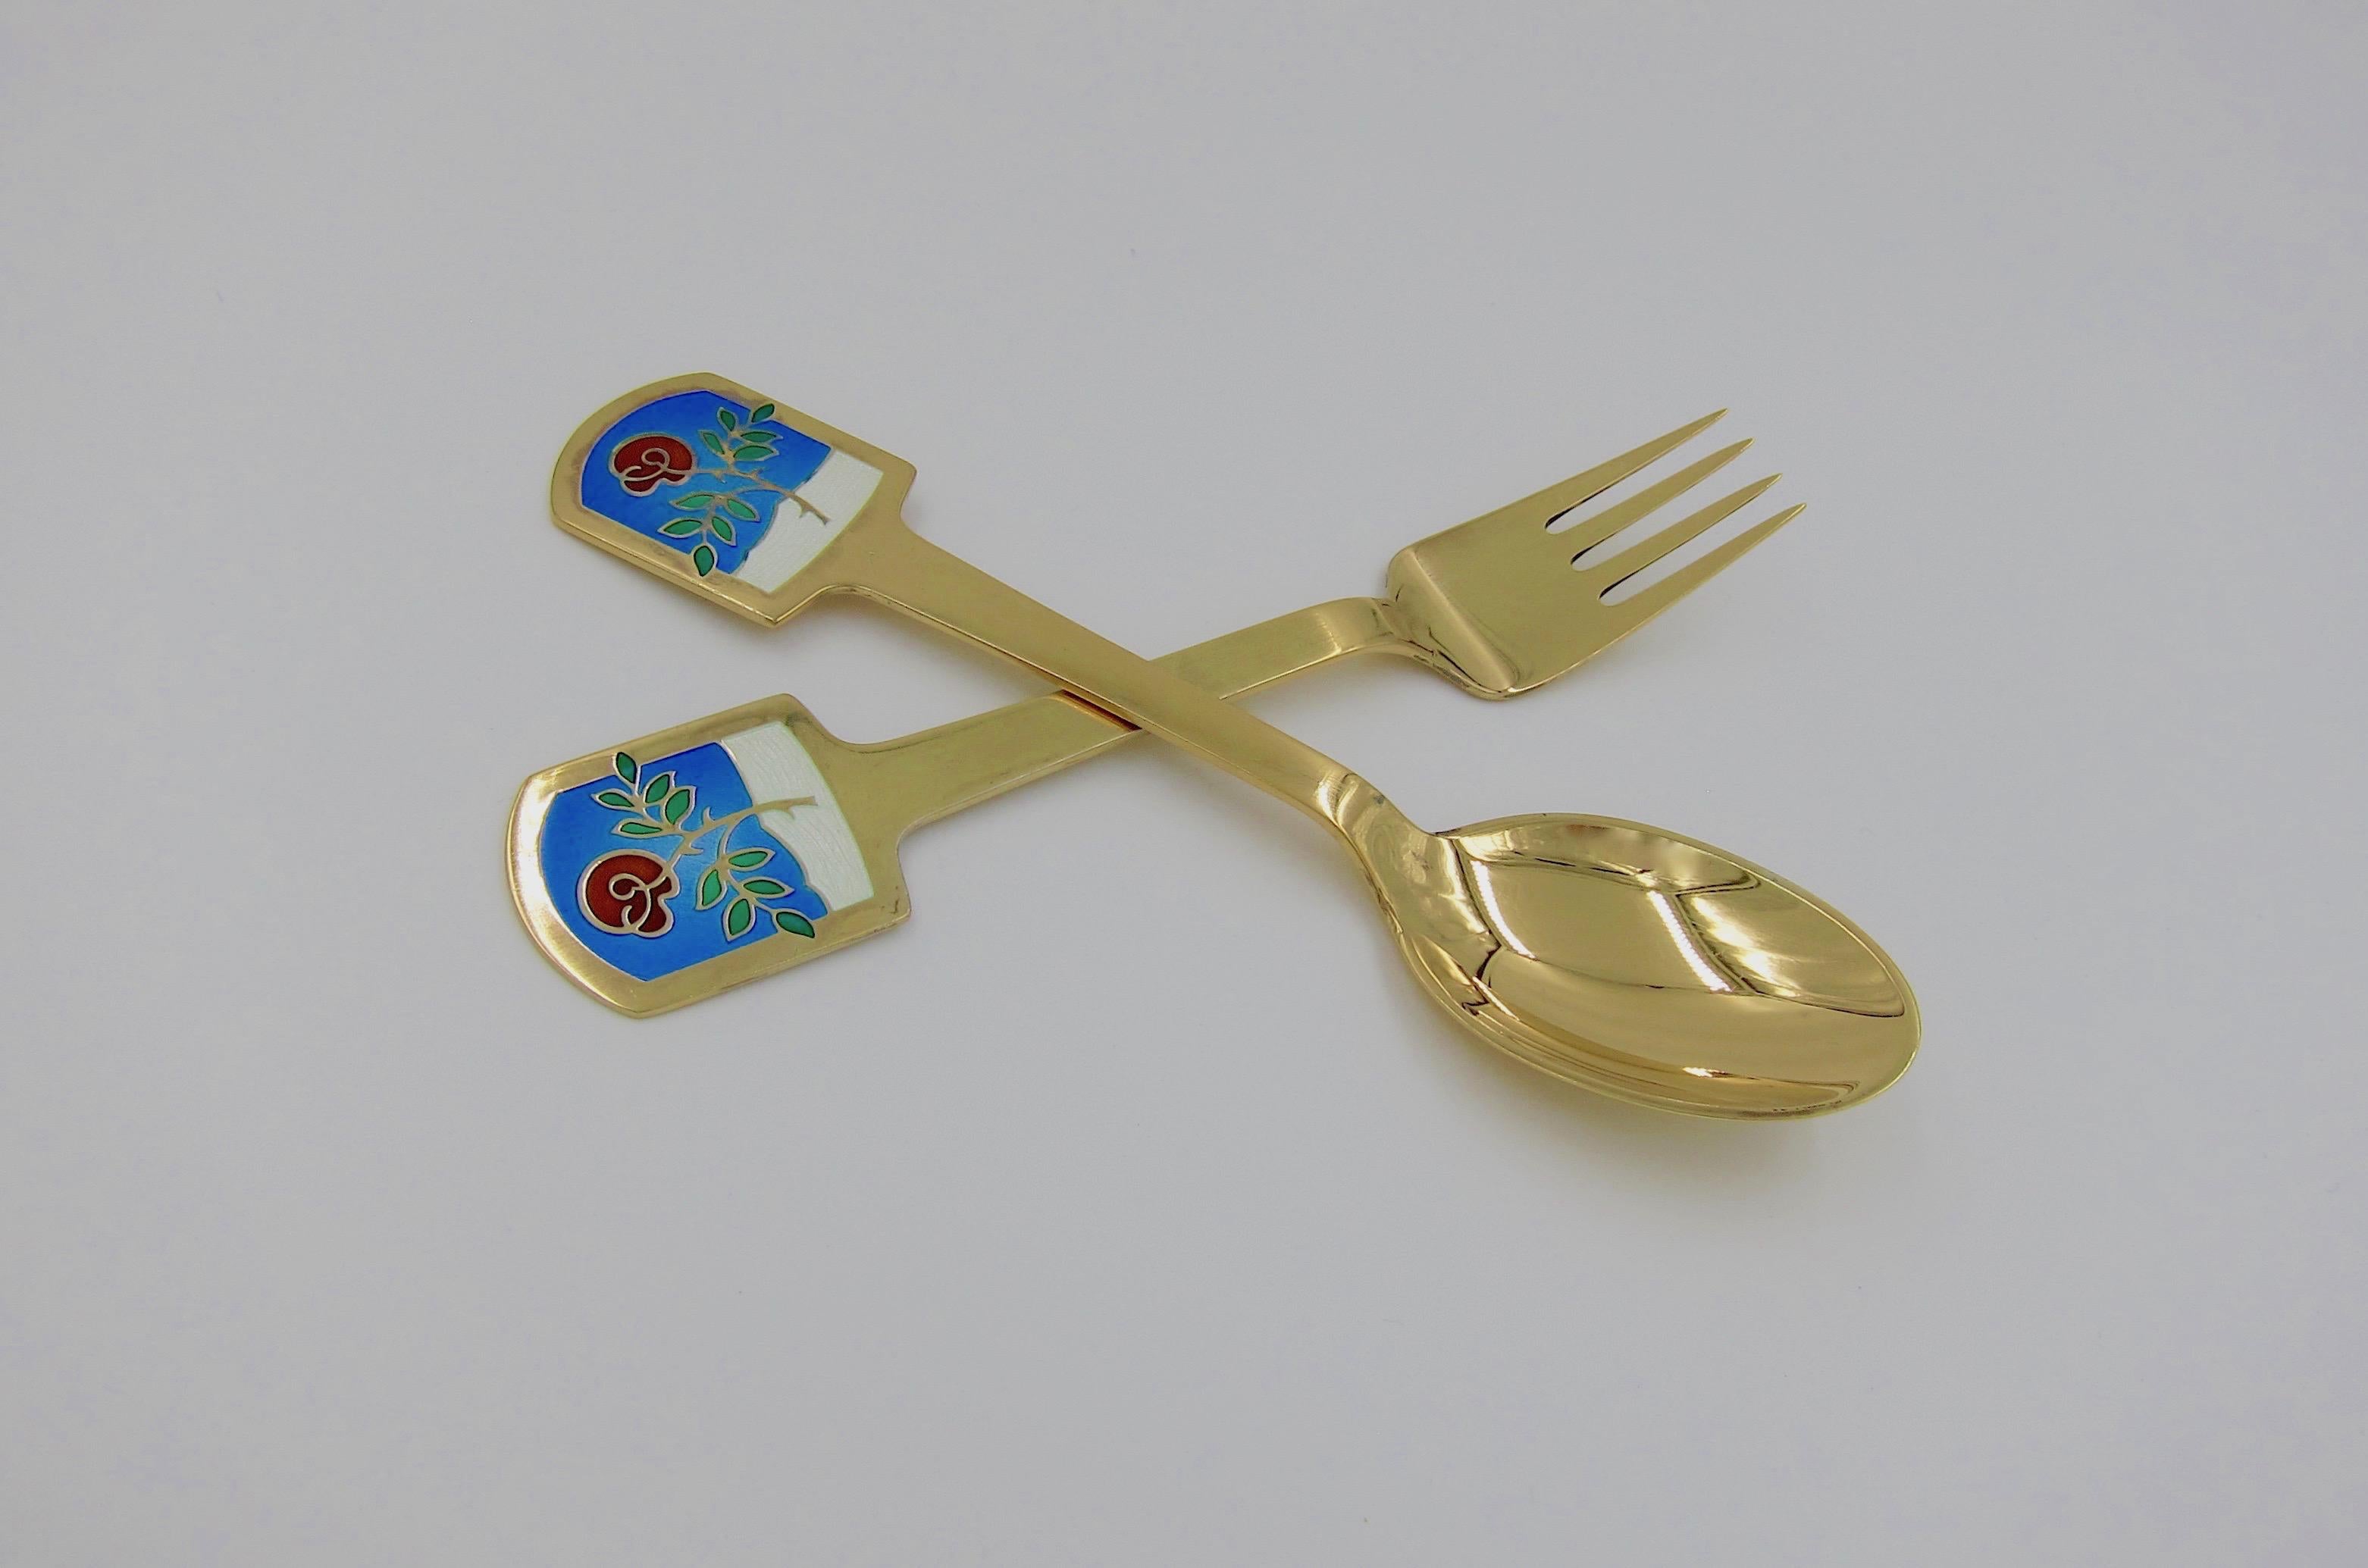 A Danish gilt sterling silver and enamel Christmas fork and spoon set from Anton Michelsen of Copenhagen, Denmark. Poul Hanmann (1915-1981) created this 